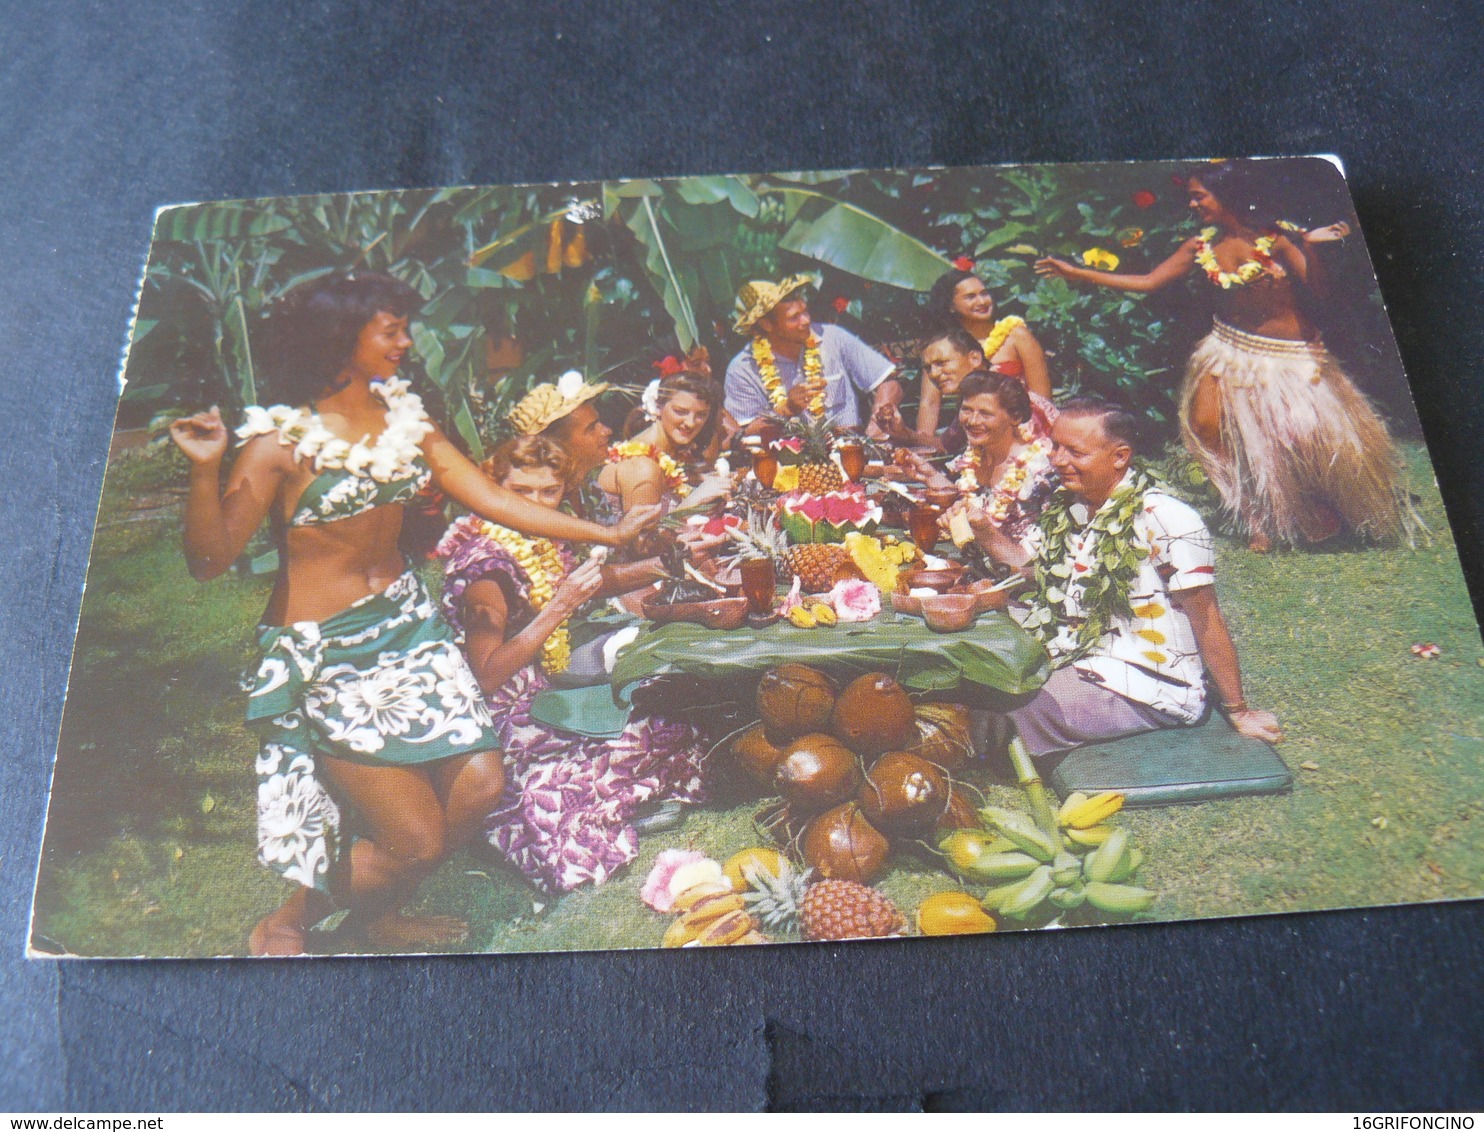 1951 ANCIENT BEAUTIFUL SMALL POSTCARD OF SAMOA  / ANTICA  PICCOLA CARTOLINA  VIAGGIATA DI SAMOA - American Samoa